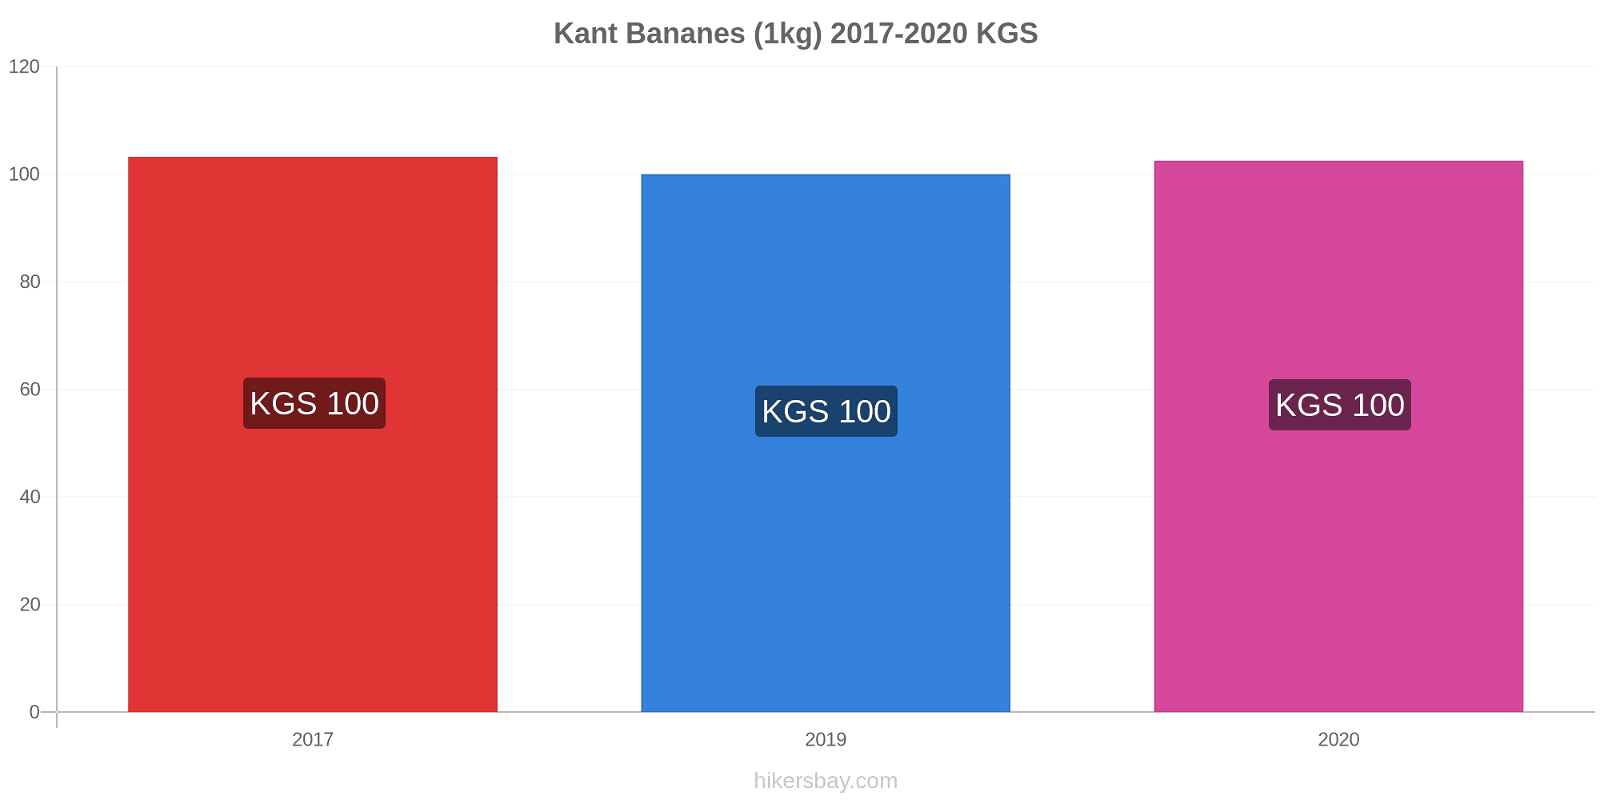 Kant changements de prix Bananes (1kg) hikersbay.com